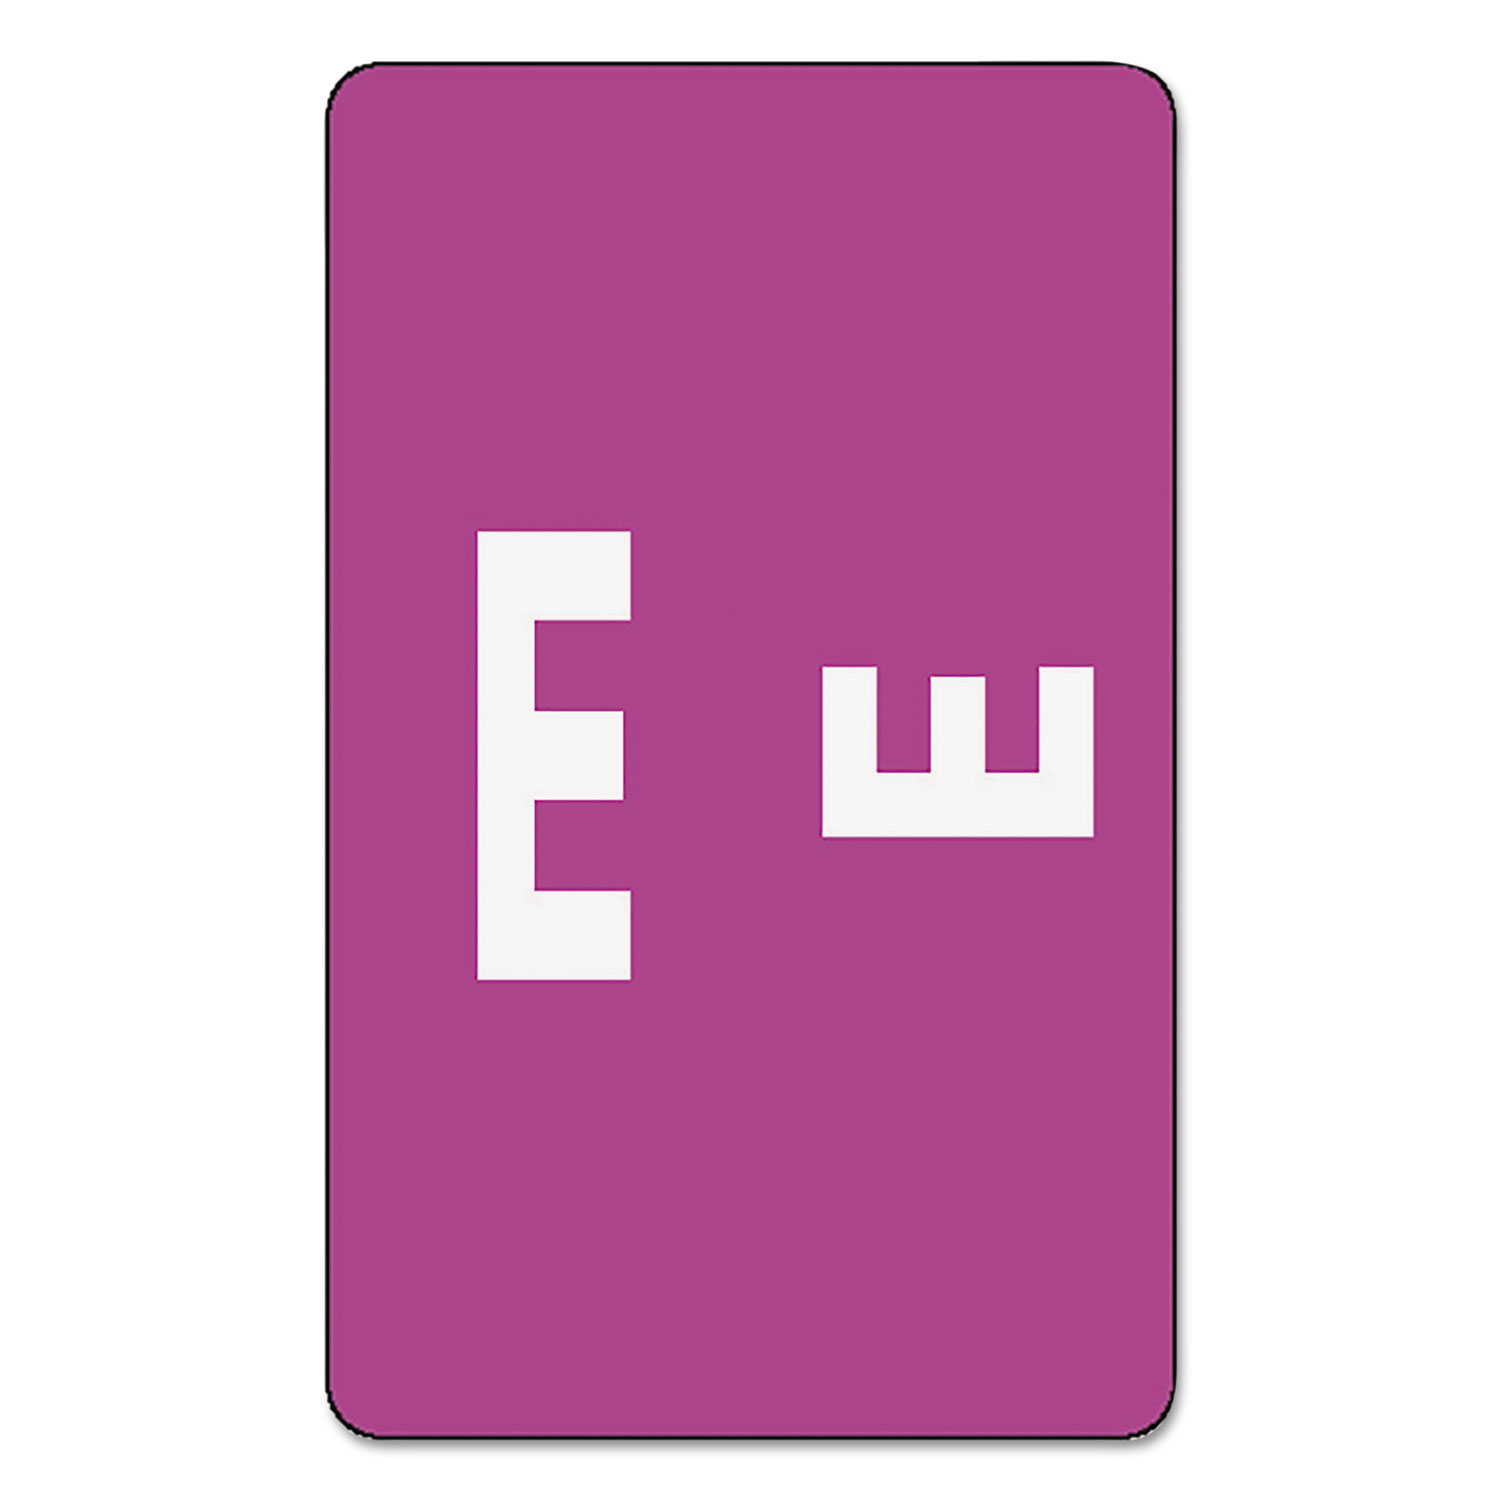  Smead 67175 AlphaZ Color-Coded Second Letter Alphabetical Labels, E, 1 x 1.63, Purple, 10/Sheet, 10 Sheets/Pack (SMD67175) 